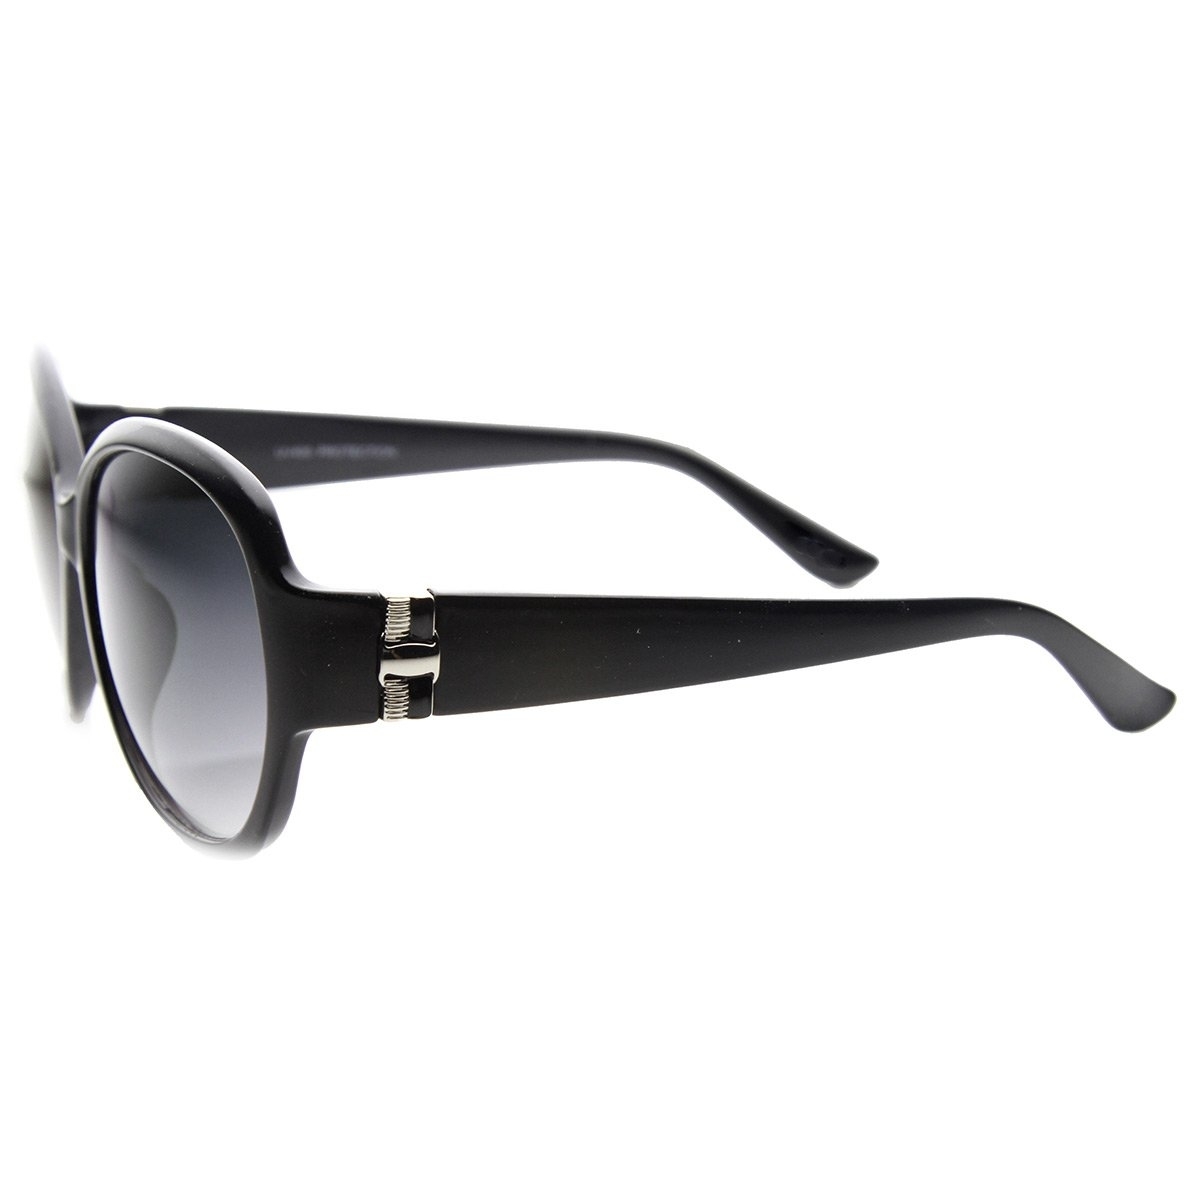 Designer Large Metal Accent Round Oversized Sunglasses - Black-White Lavender